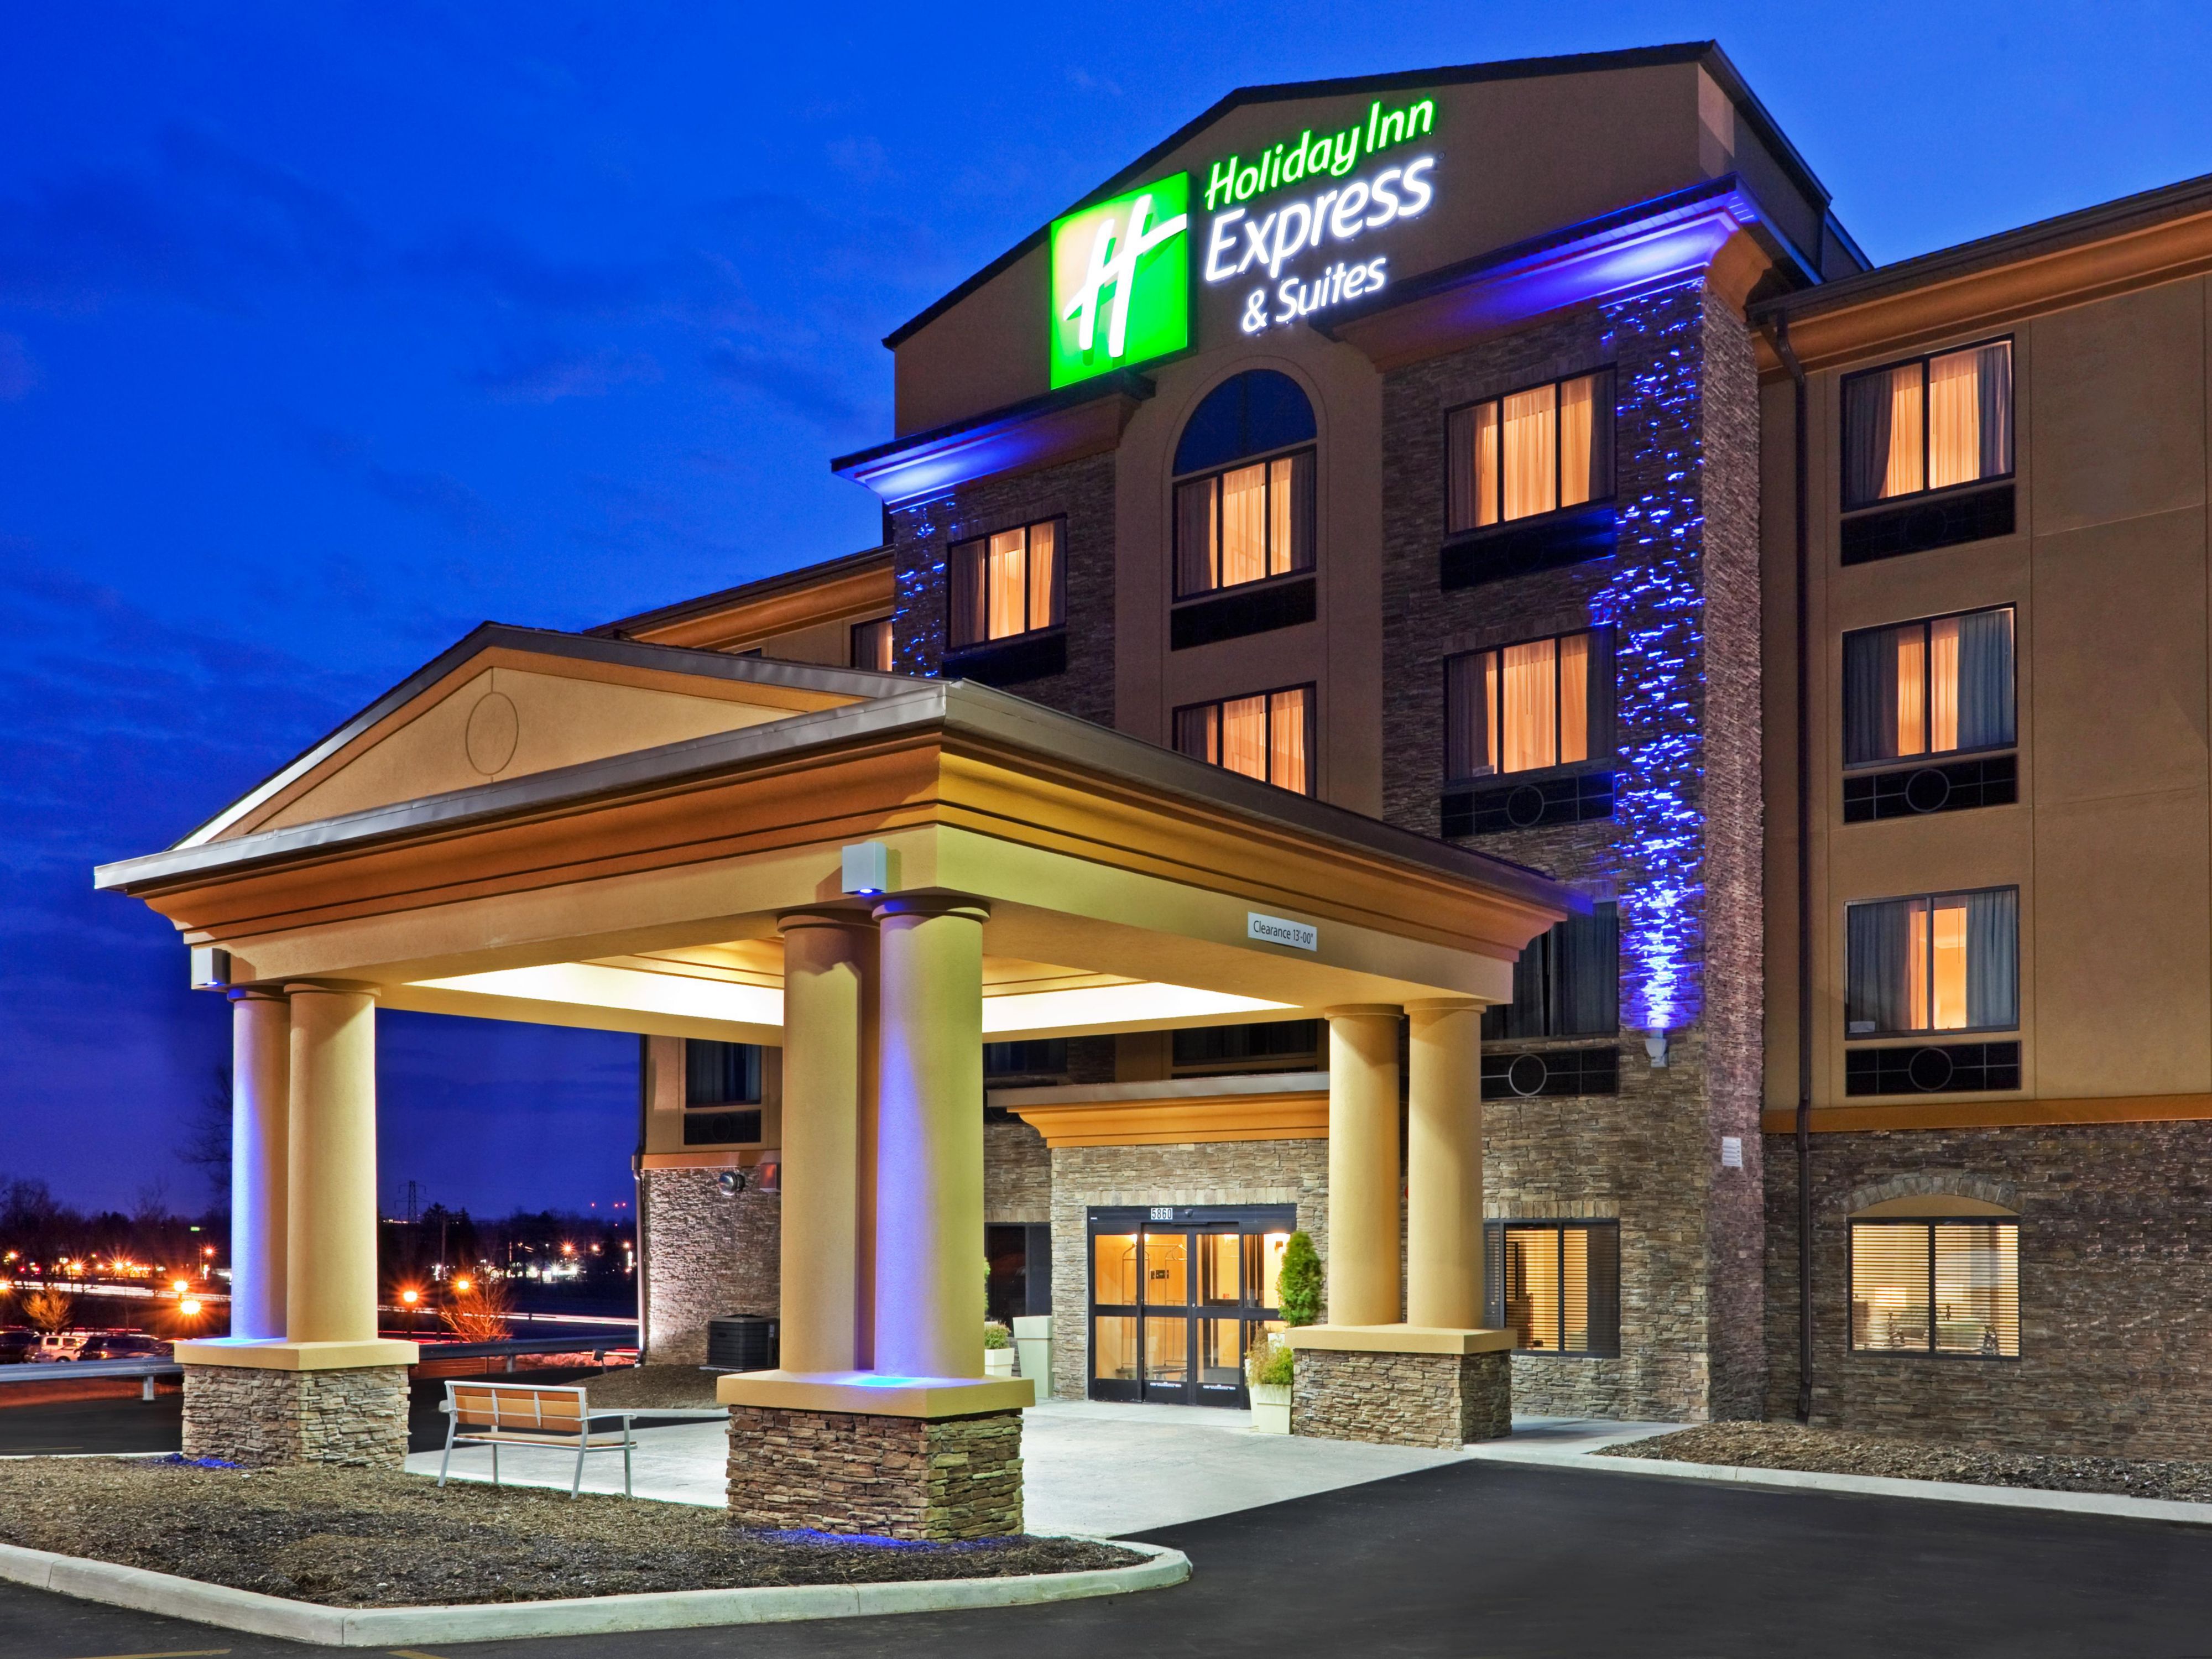 Syracuse Airport Hotel Holiday Inn Express Suites Syracuse